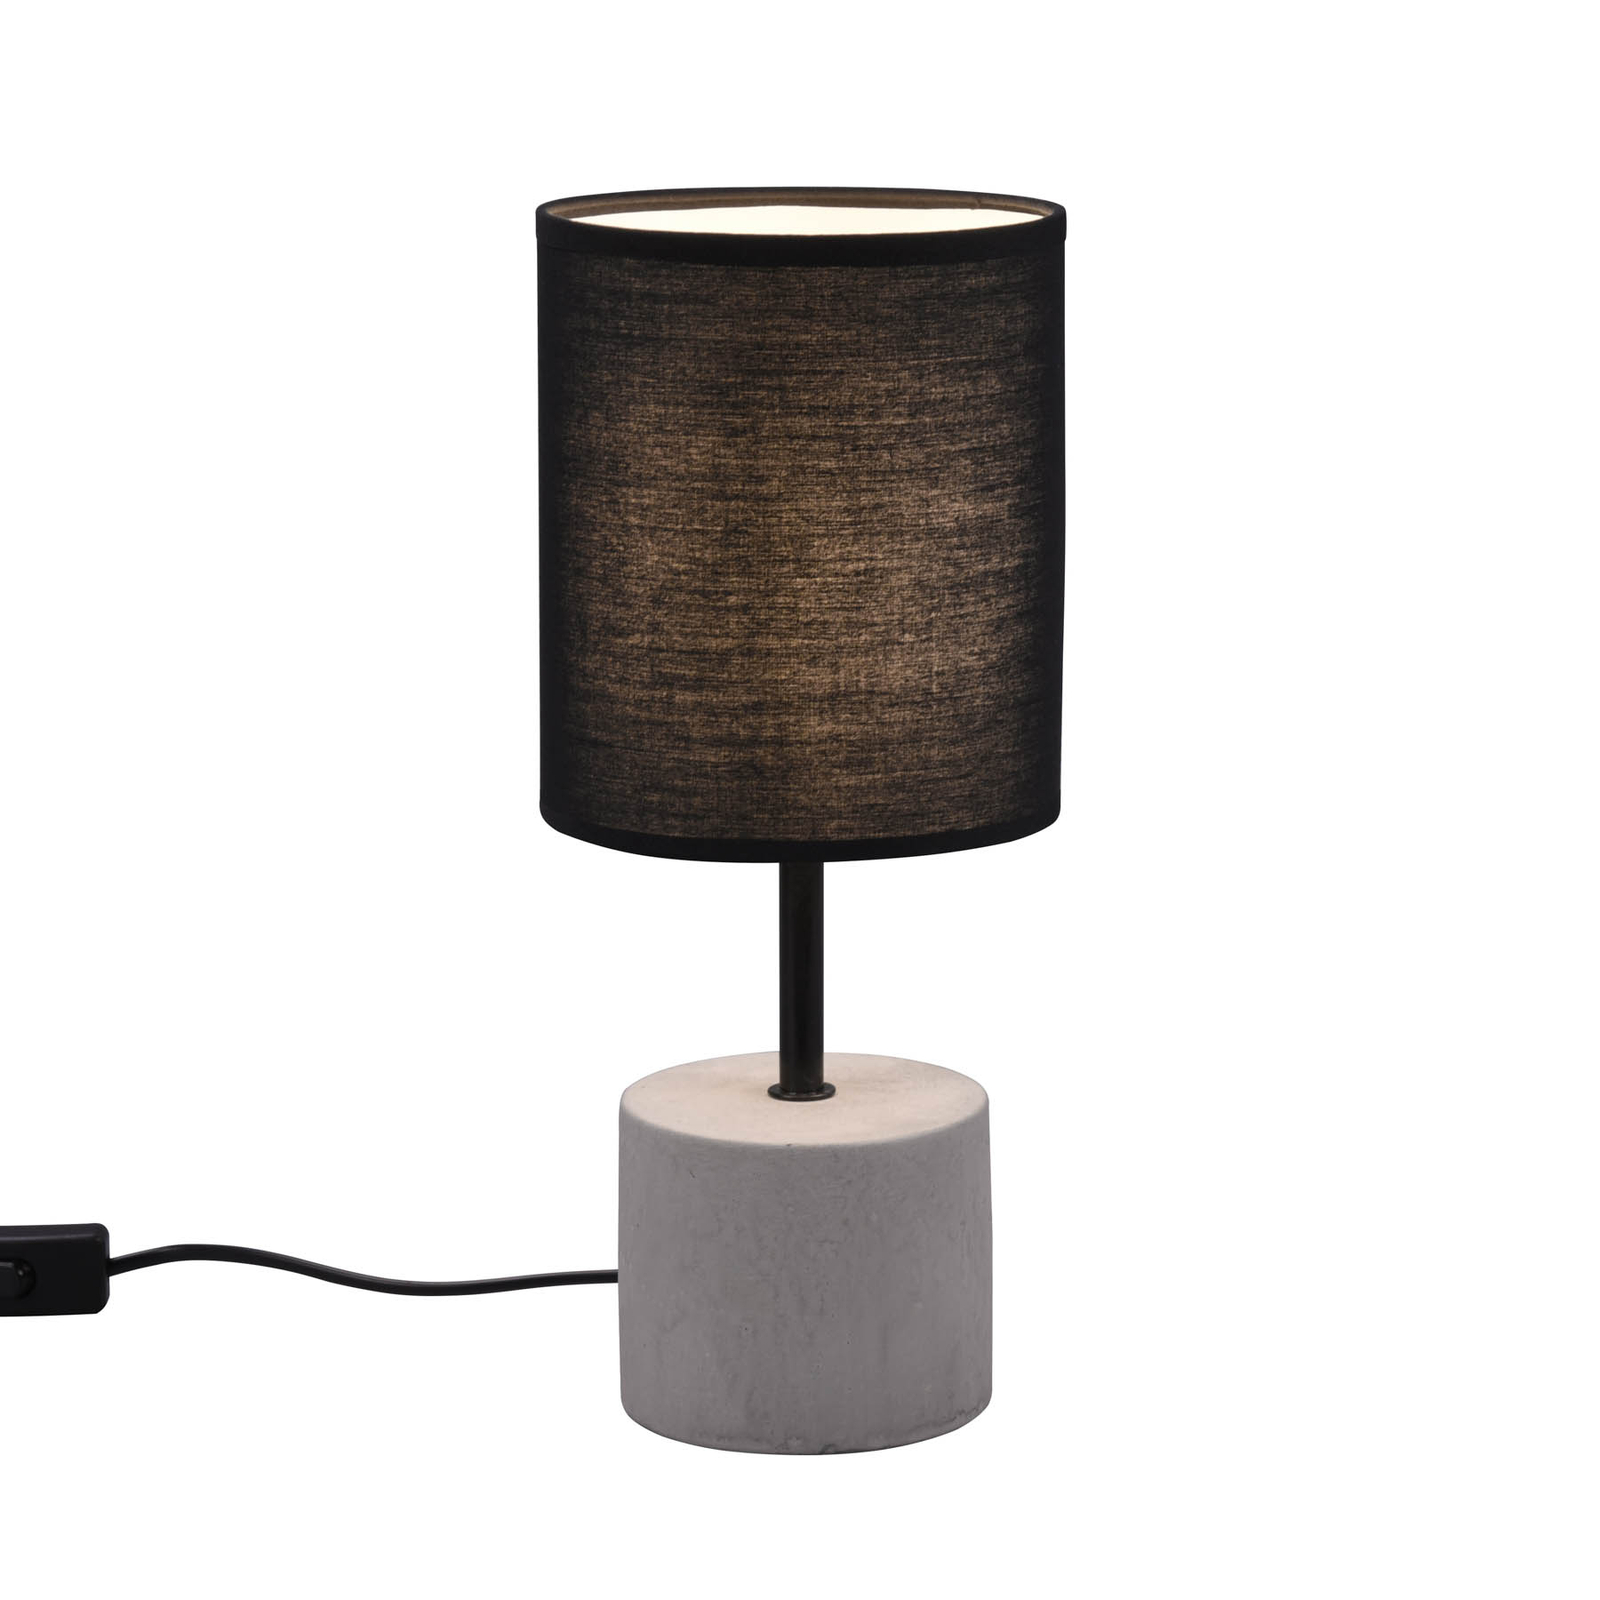 Ben table lamp concrete base, black fabric